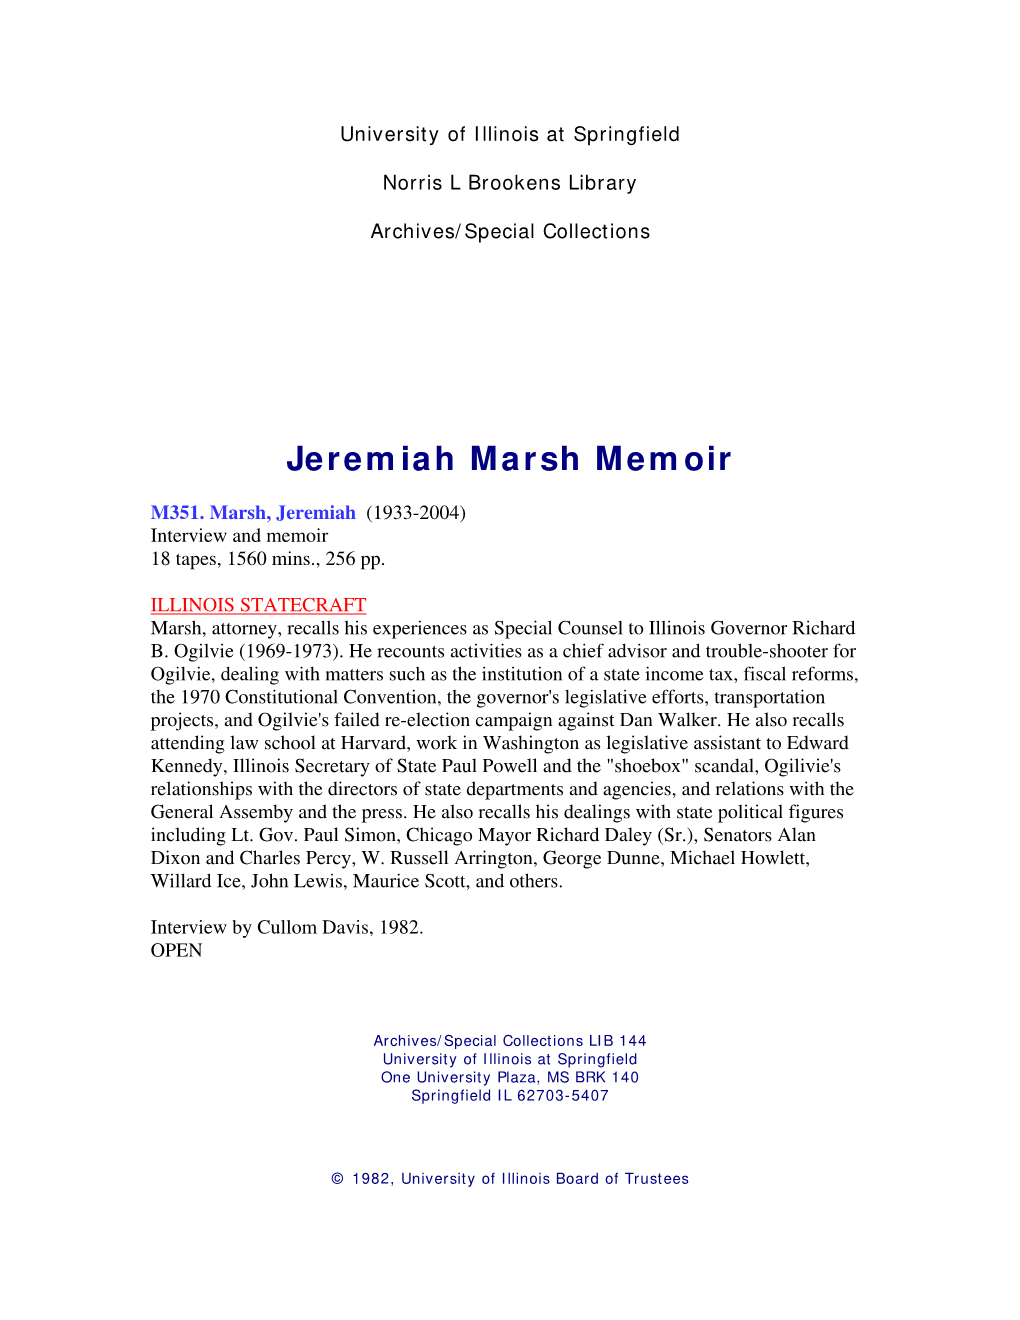 Jeremiah Marsh Memoir